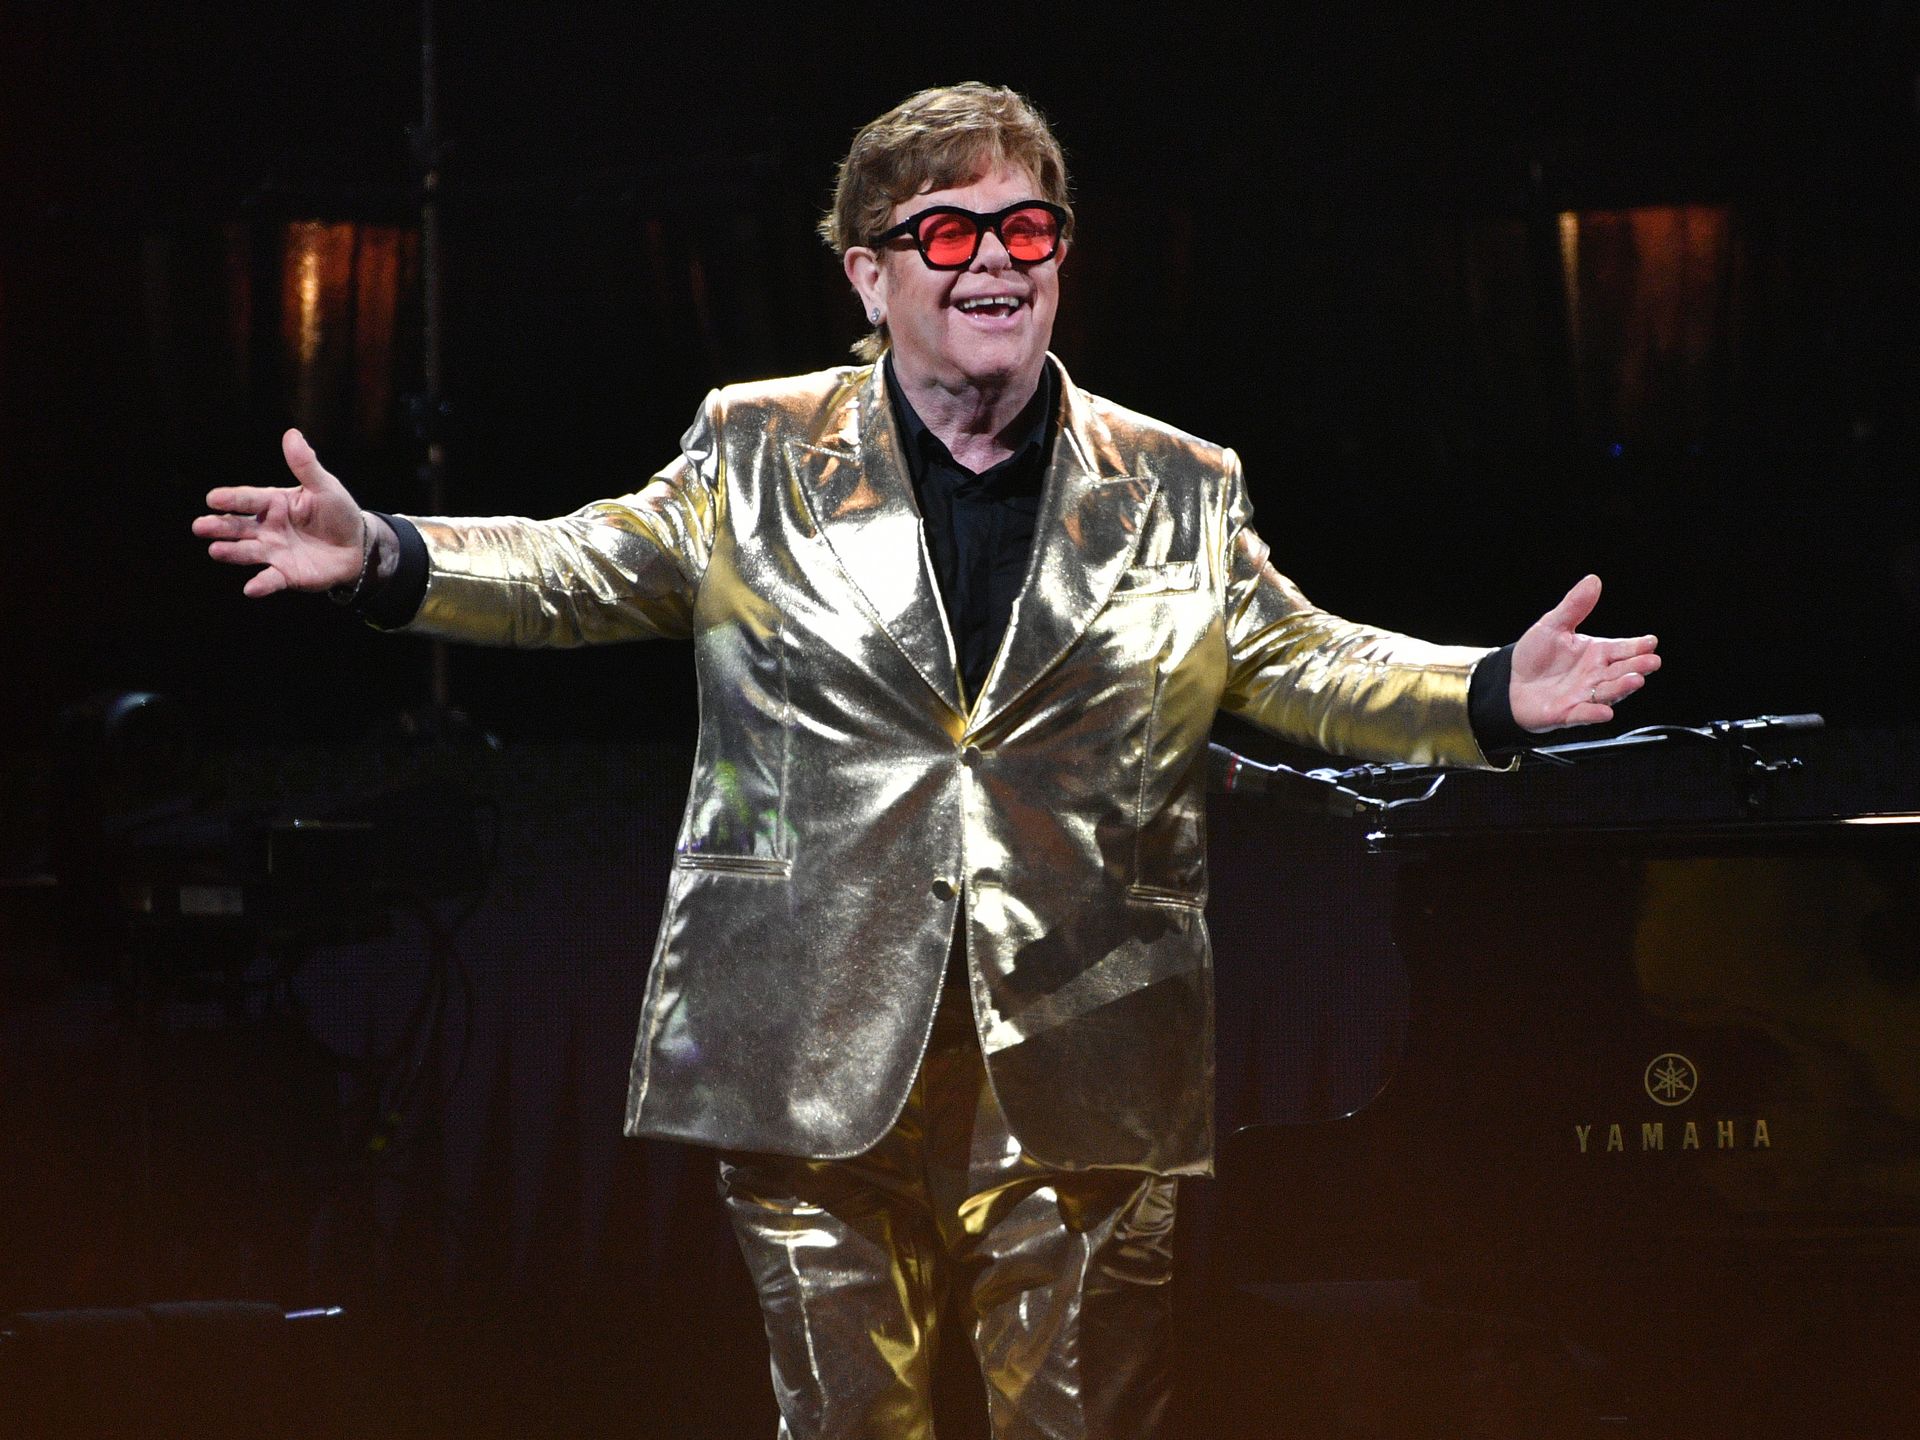 Elton John reveals his son is 'heading towards the stage